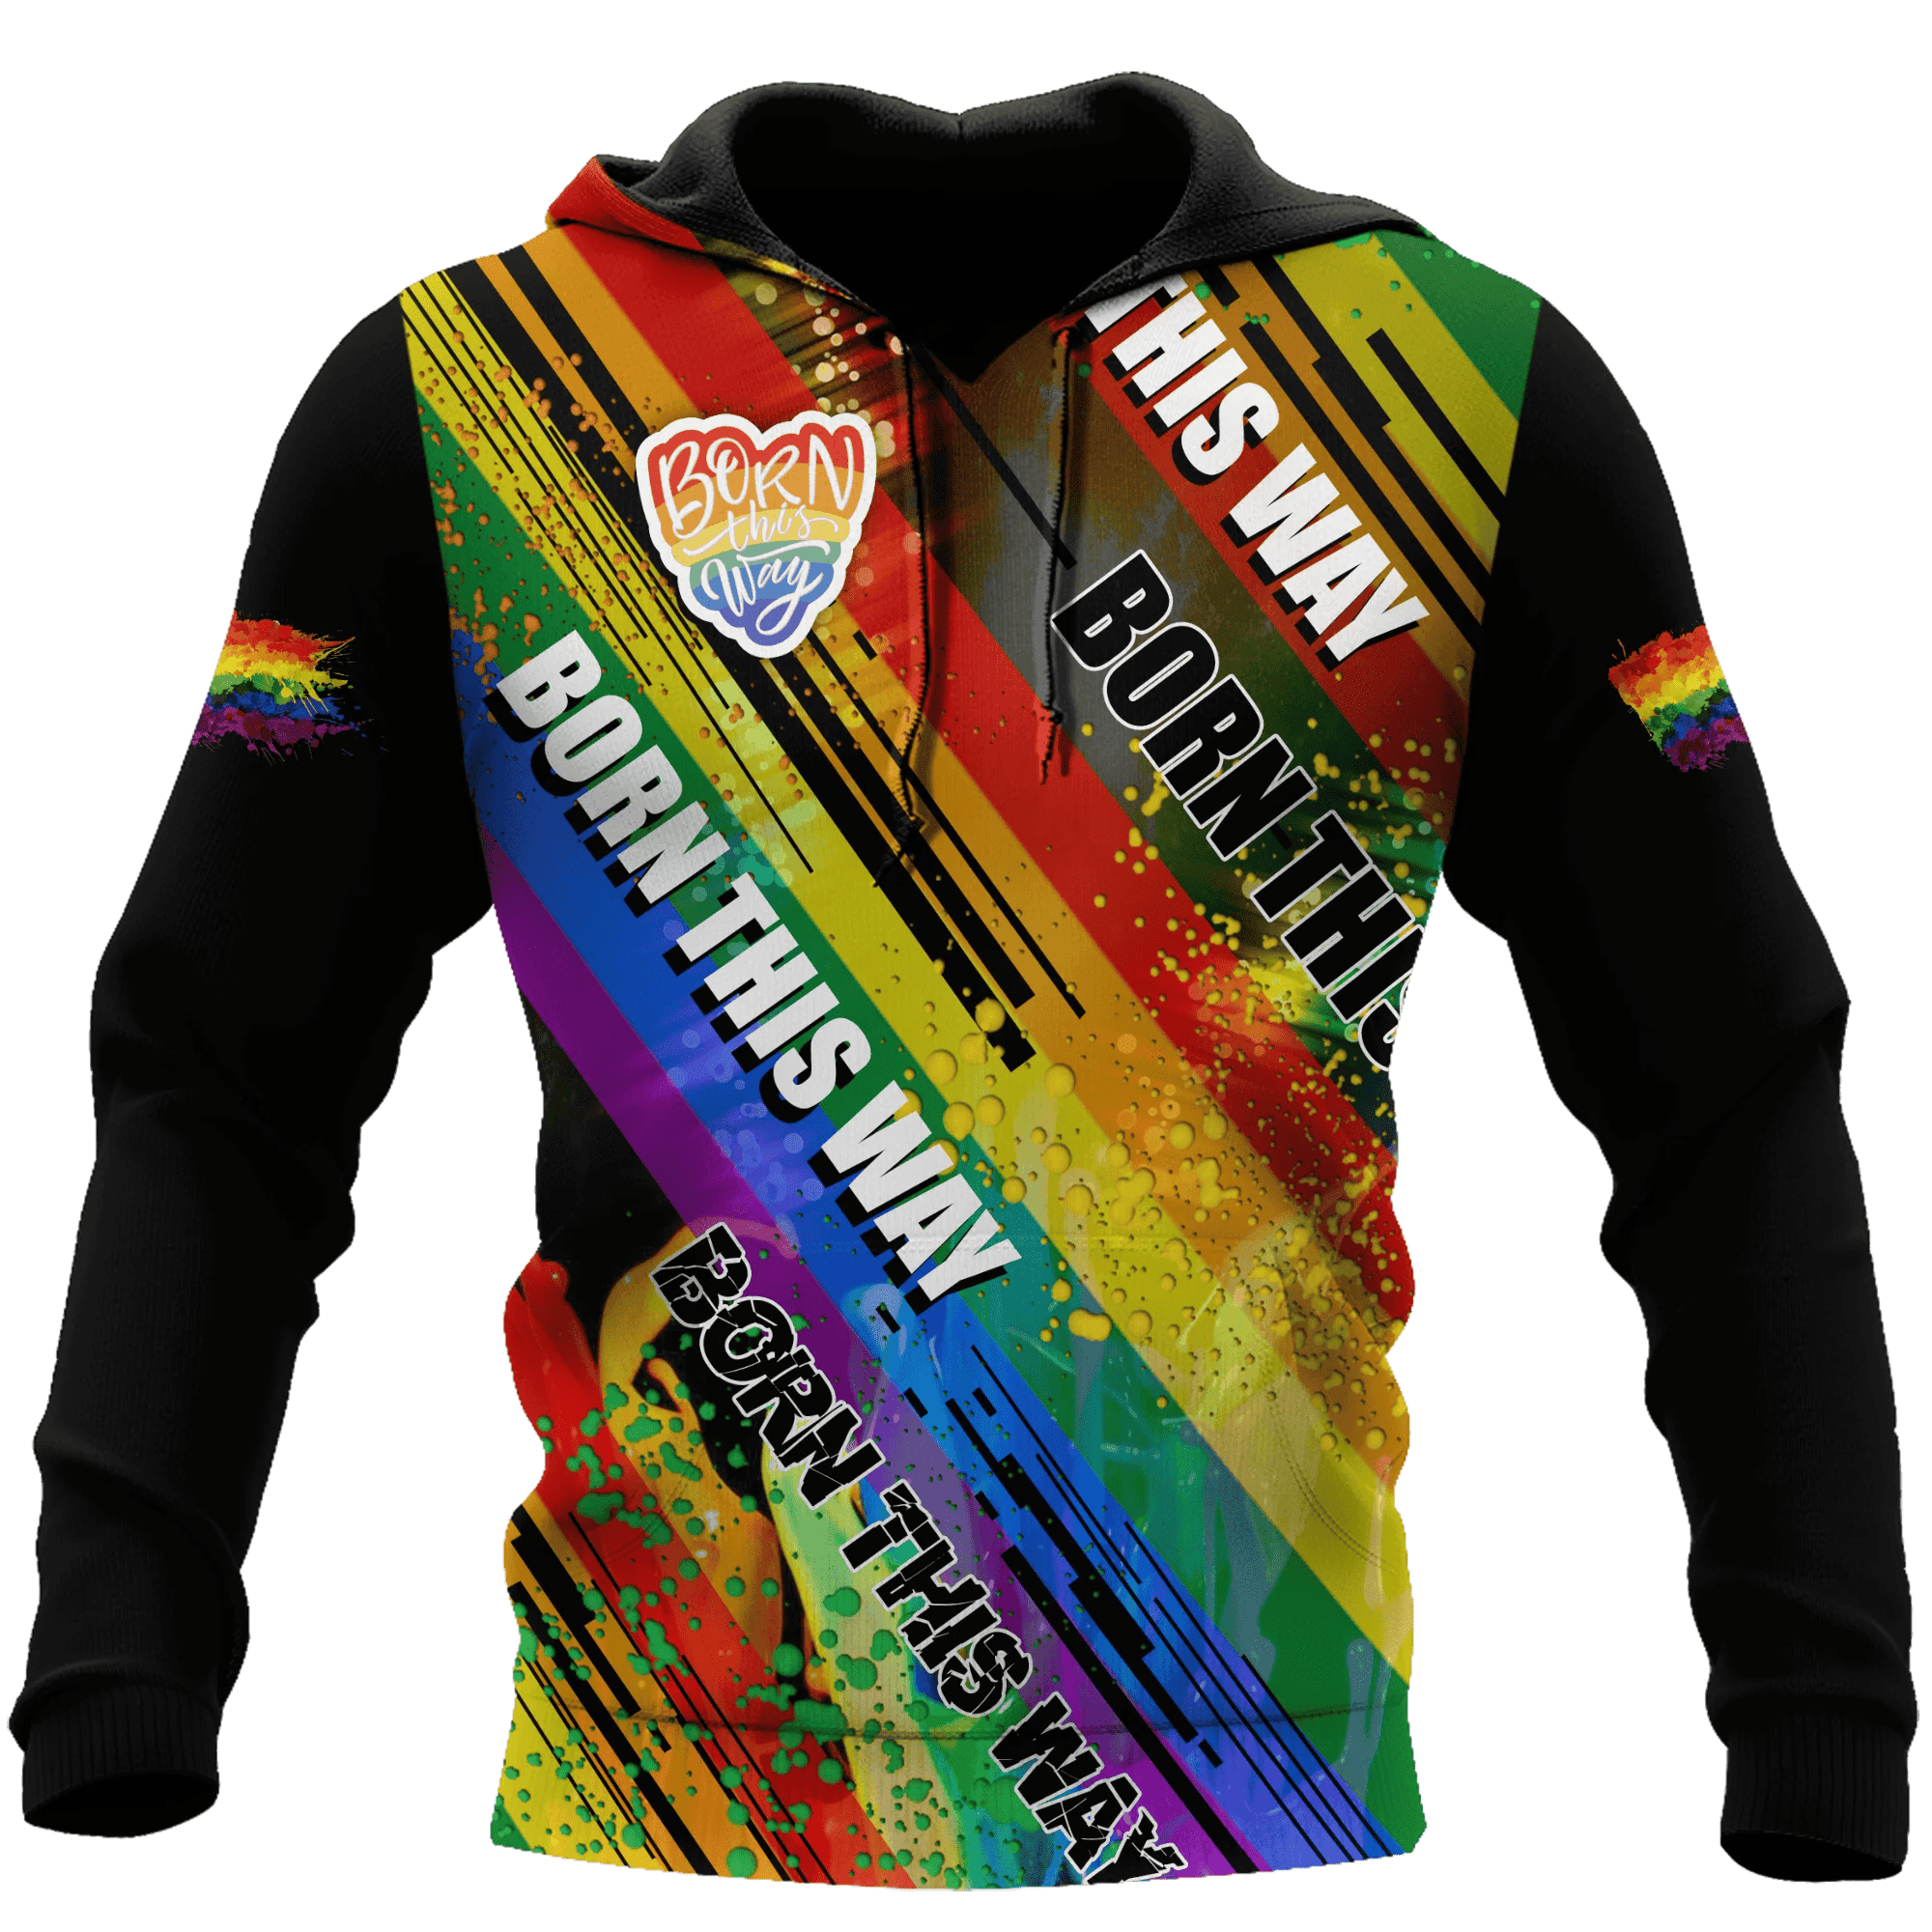 Tmarc Tee Born This Way LGBT All Over Printed Shirts NH